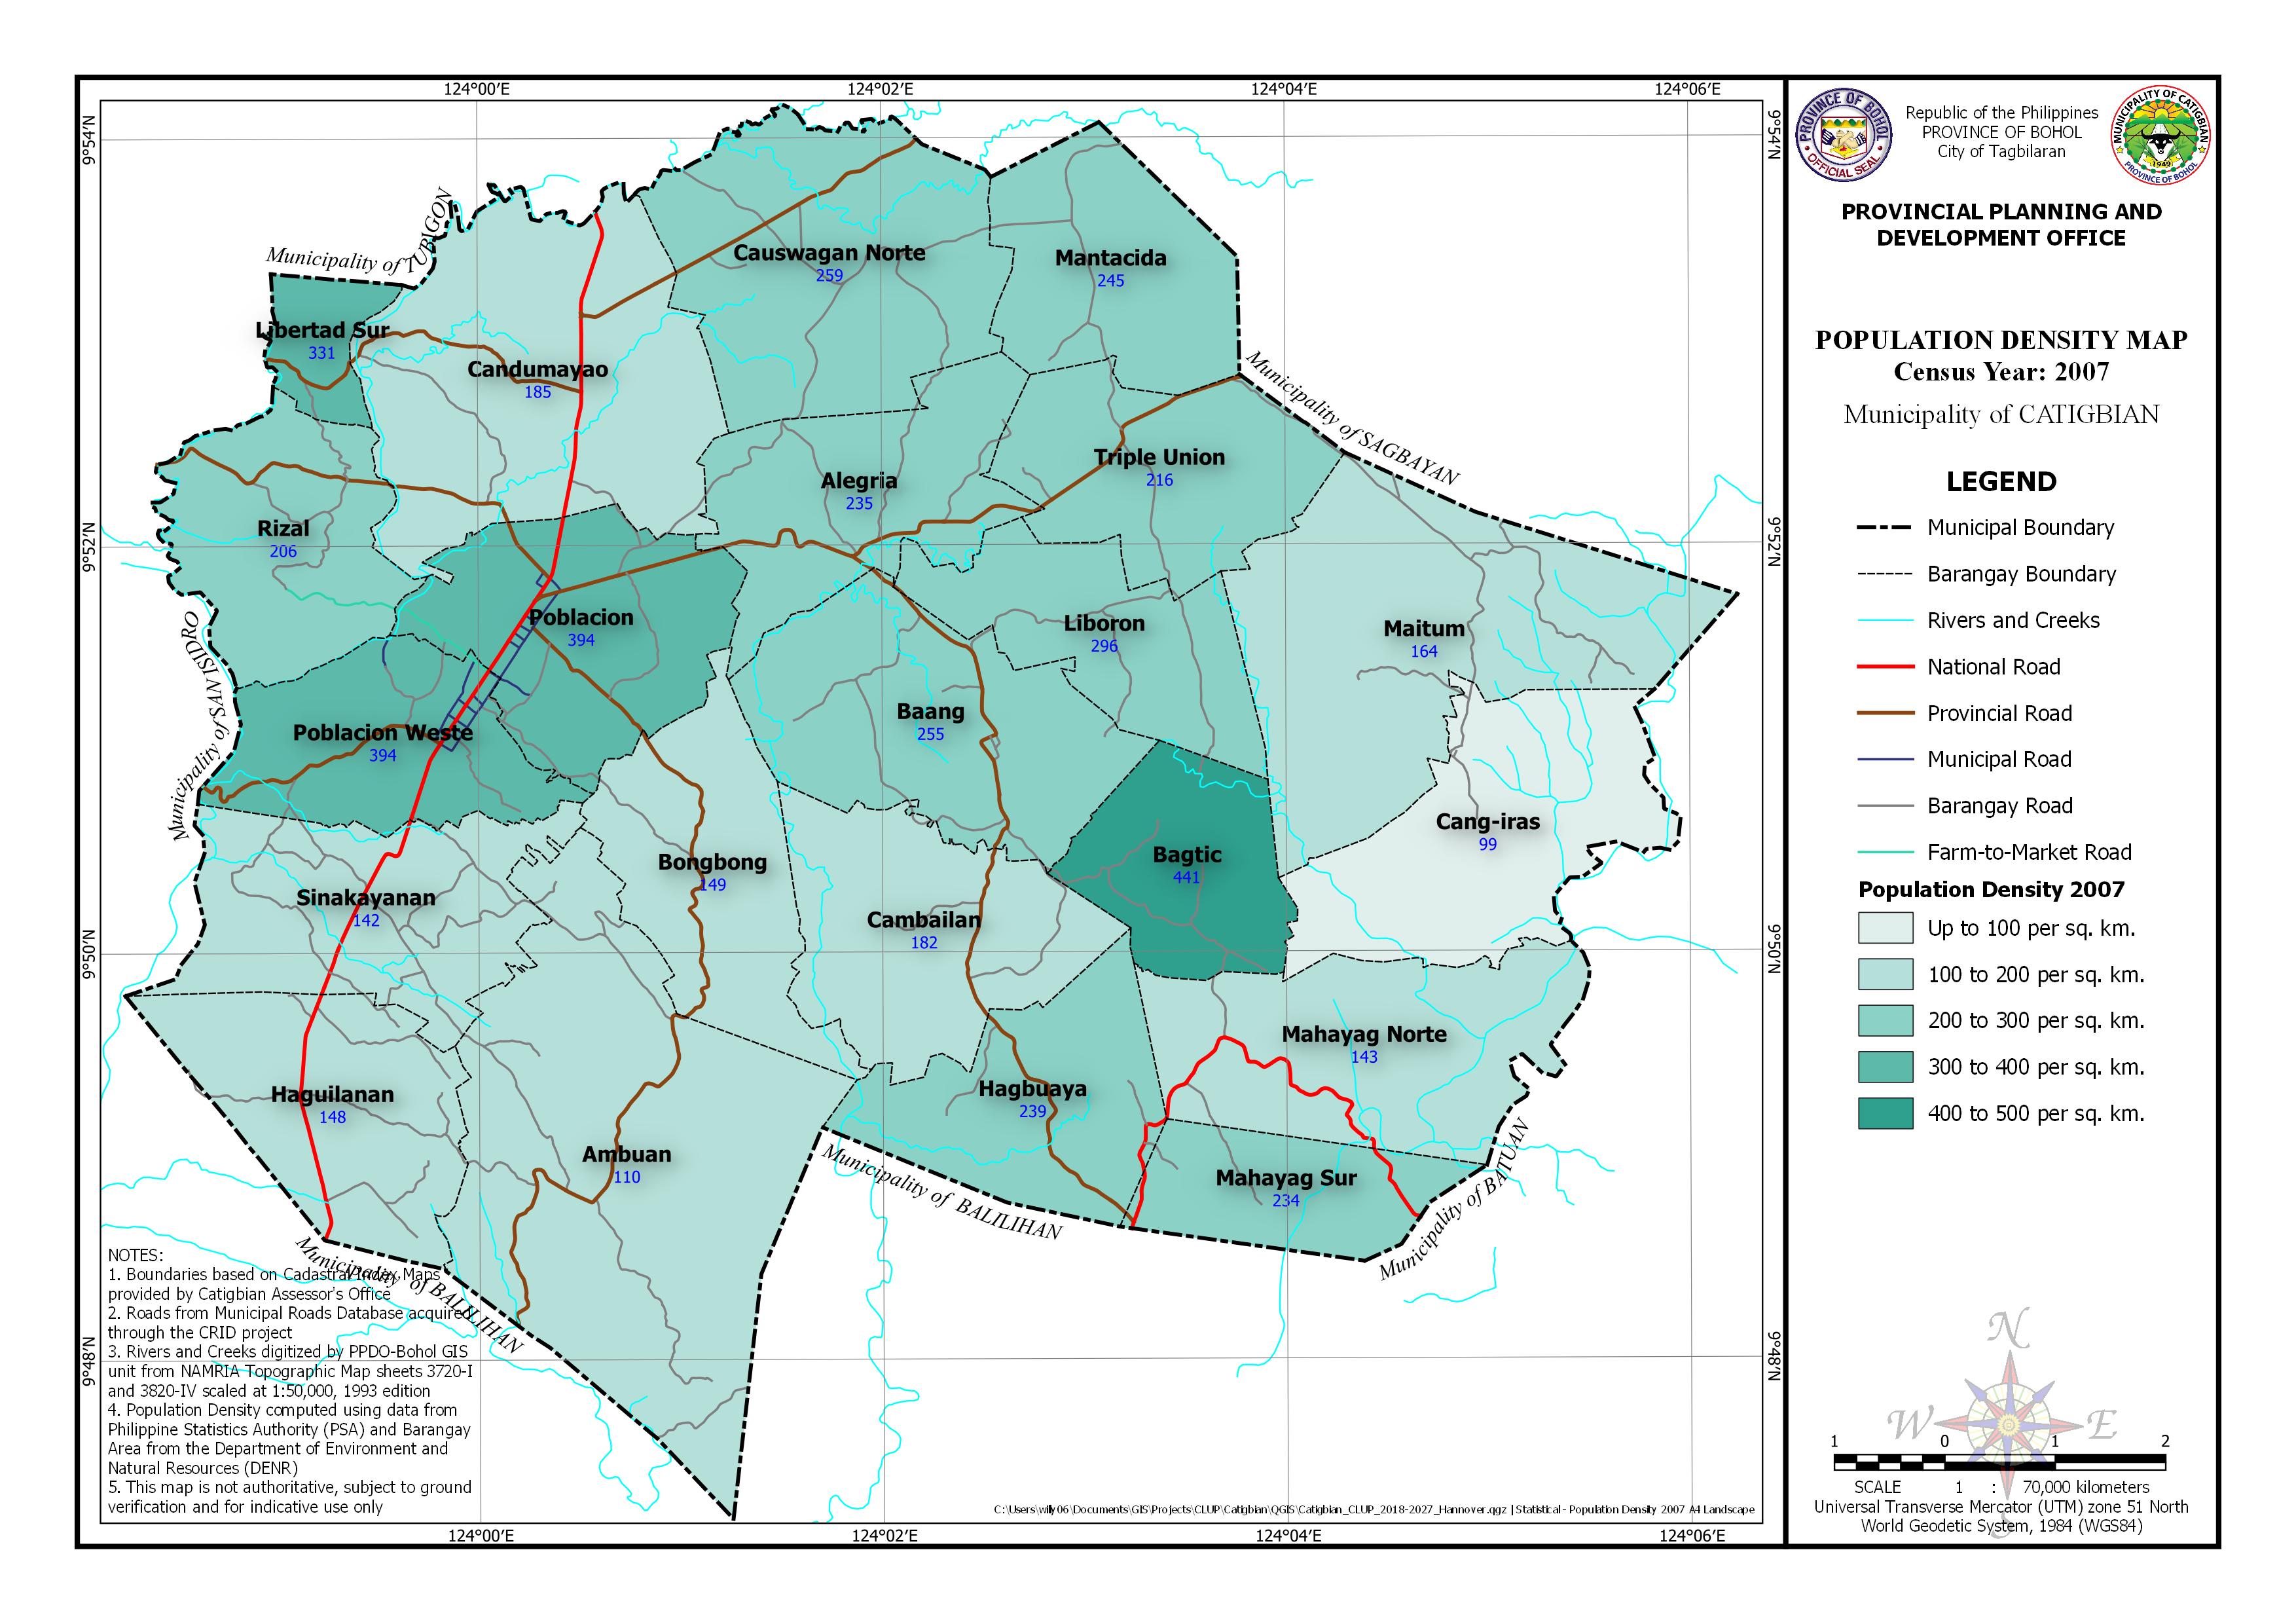 Population Density Census Year: 2000